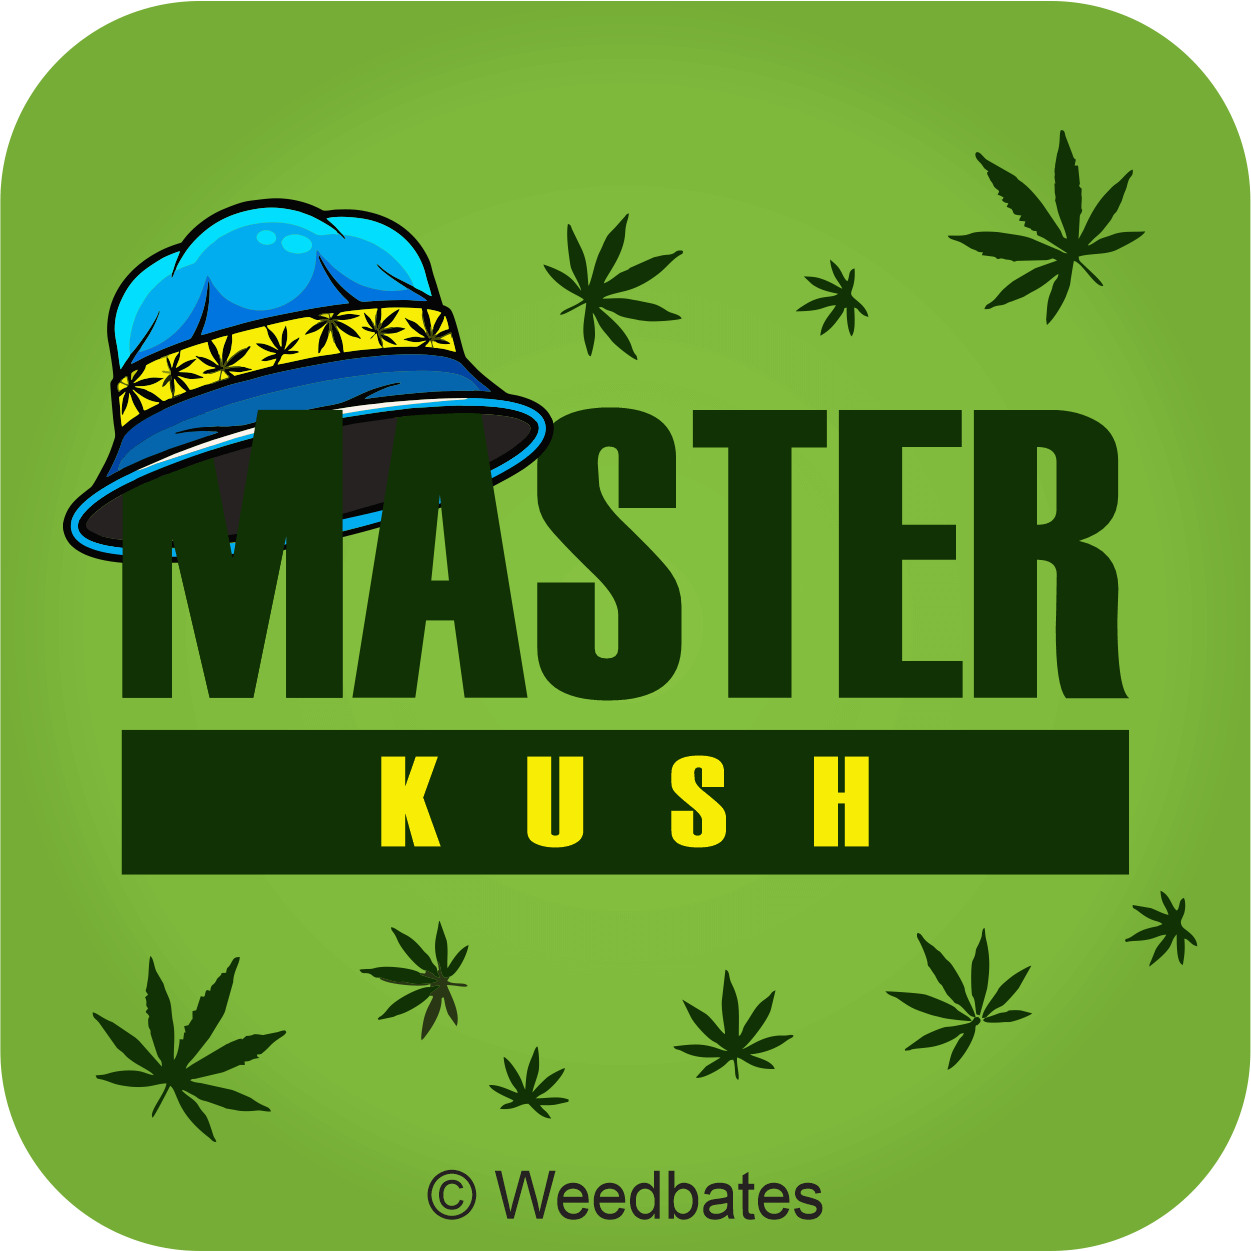 Master Kush cannabis strain